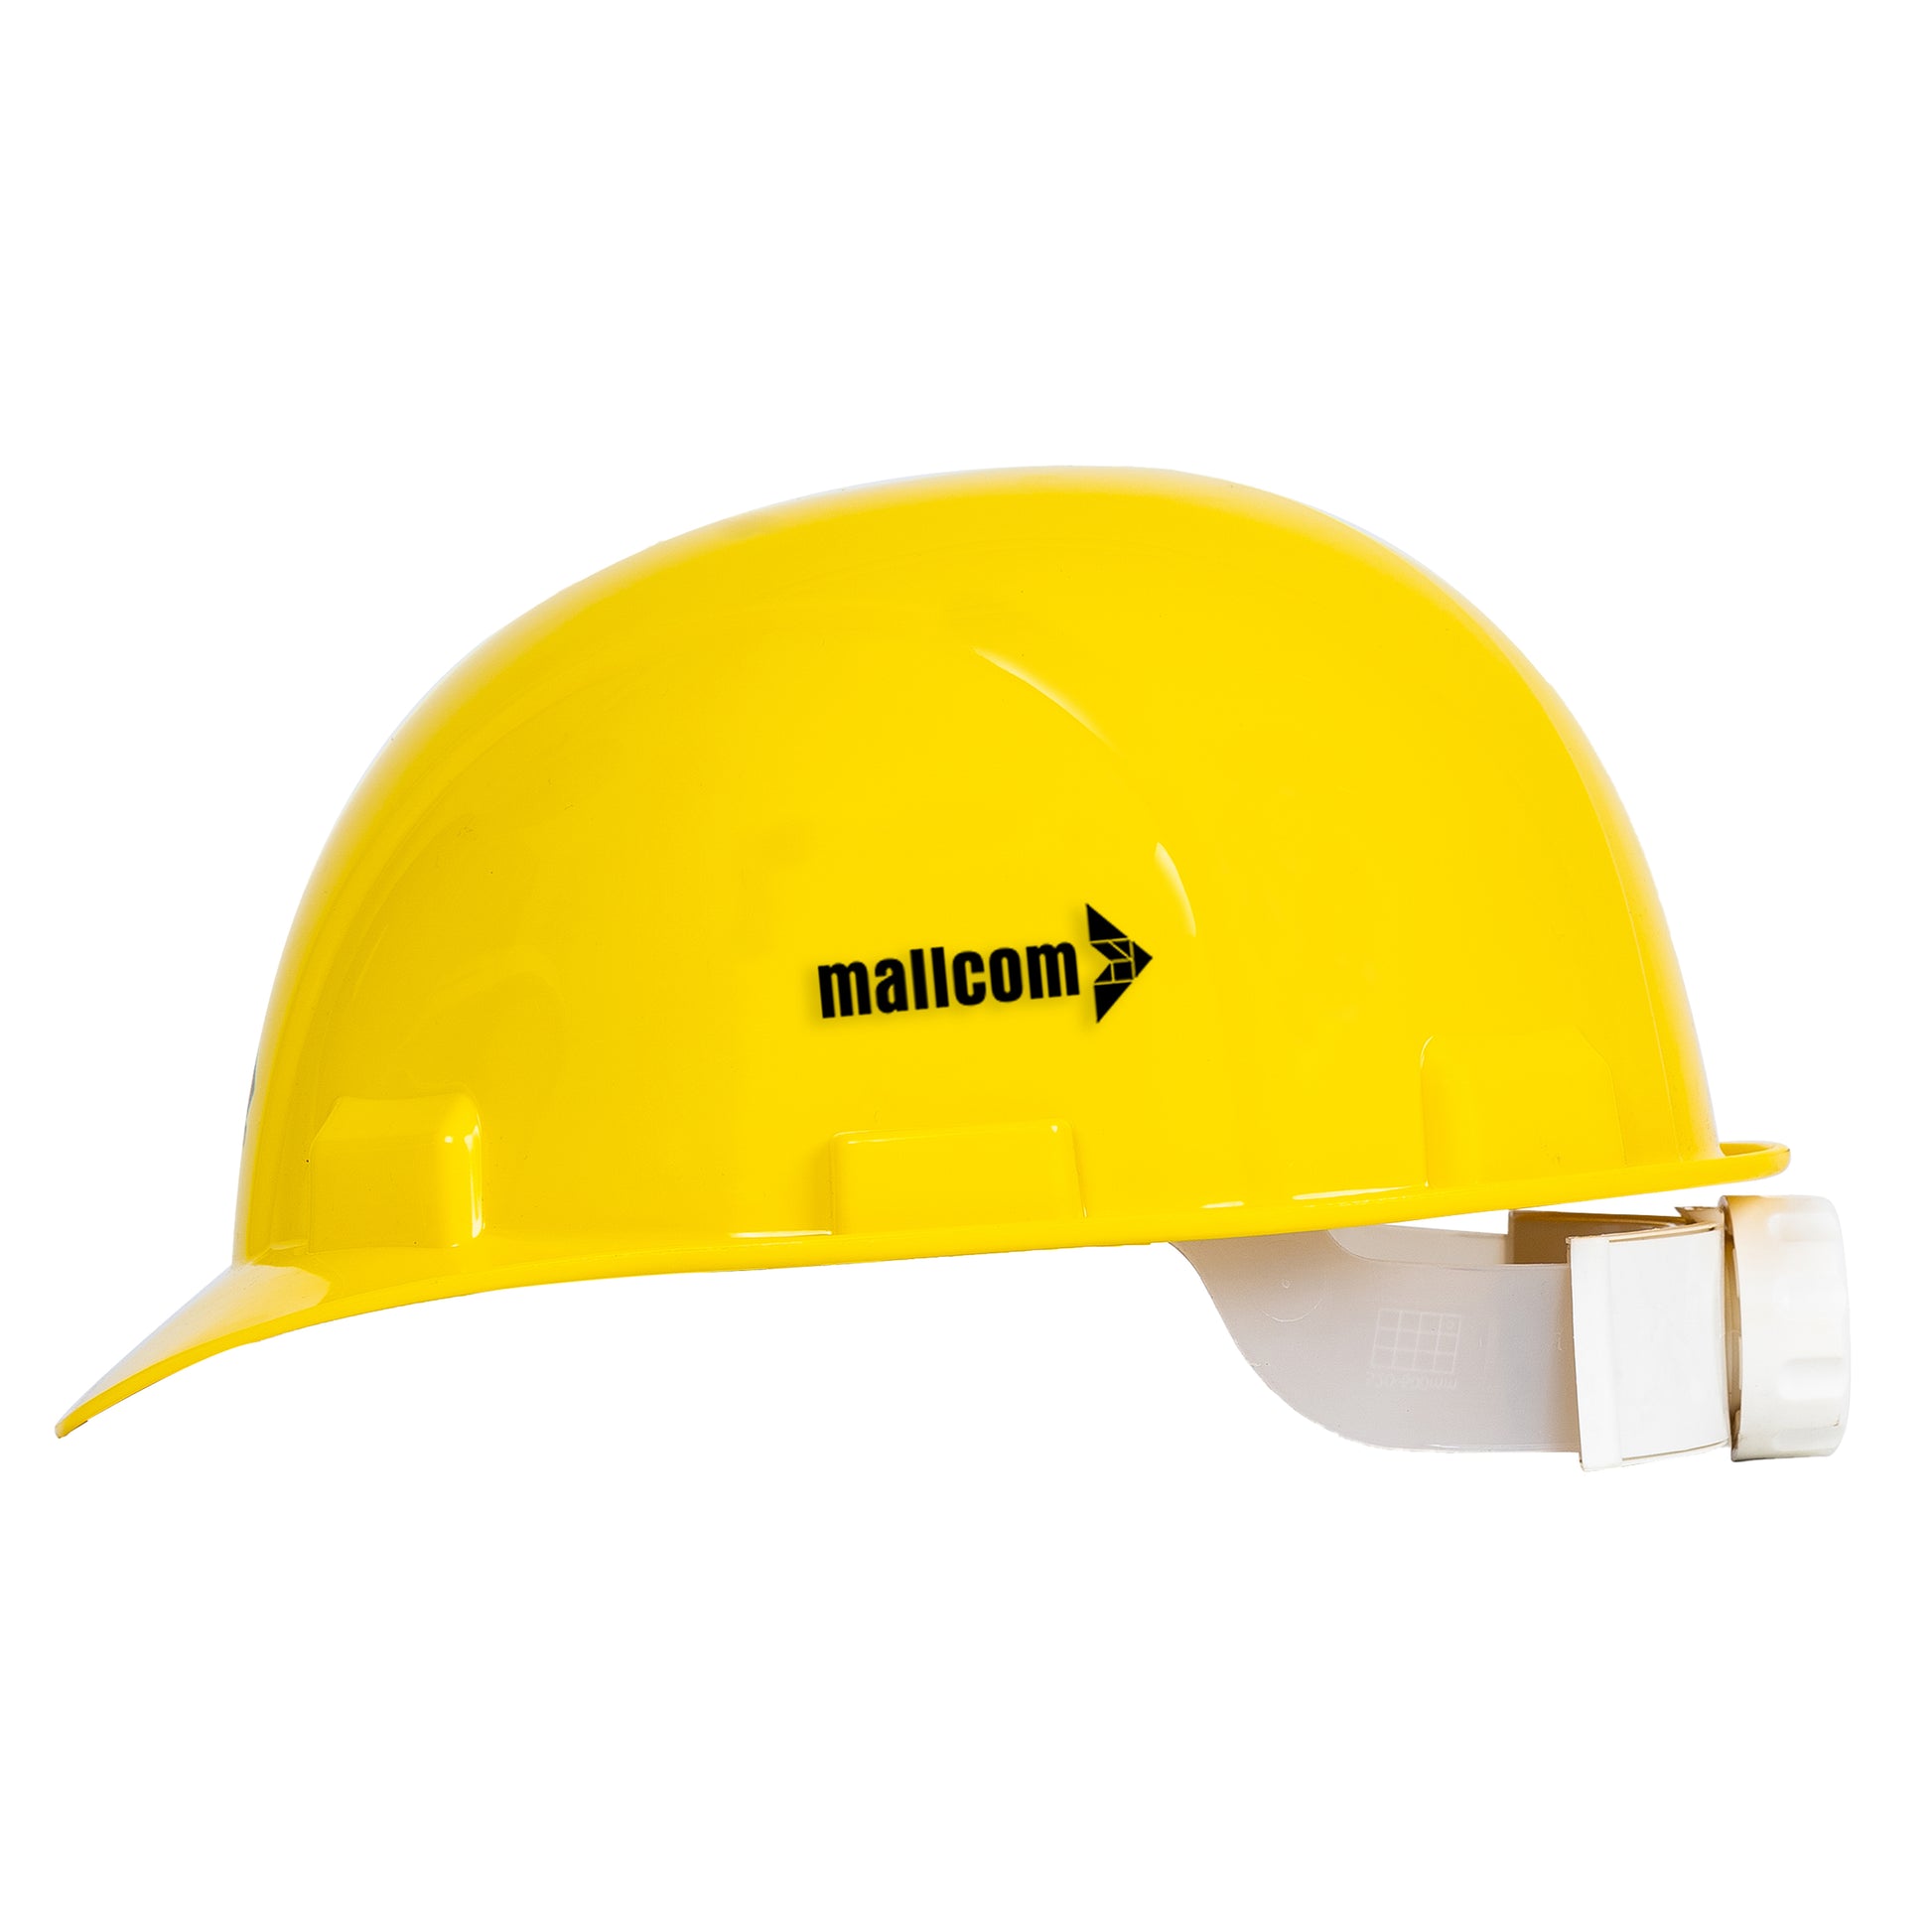 Safety helmet_Jasper II